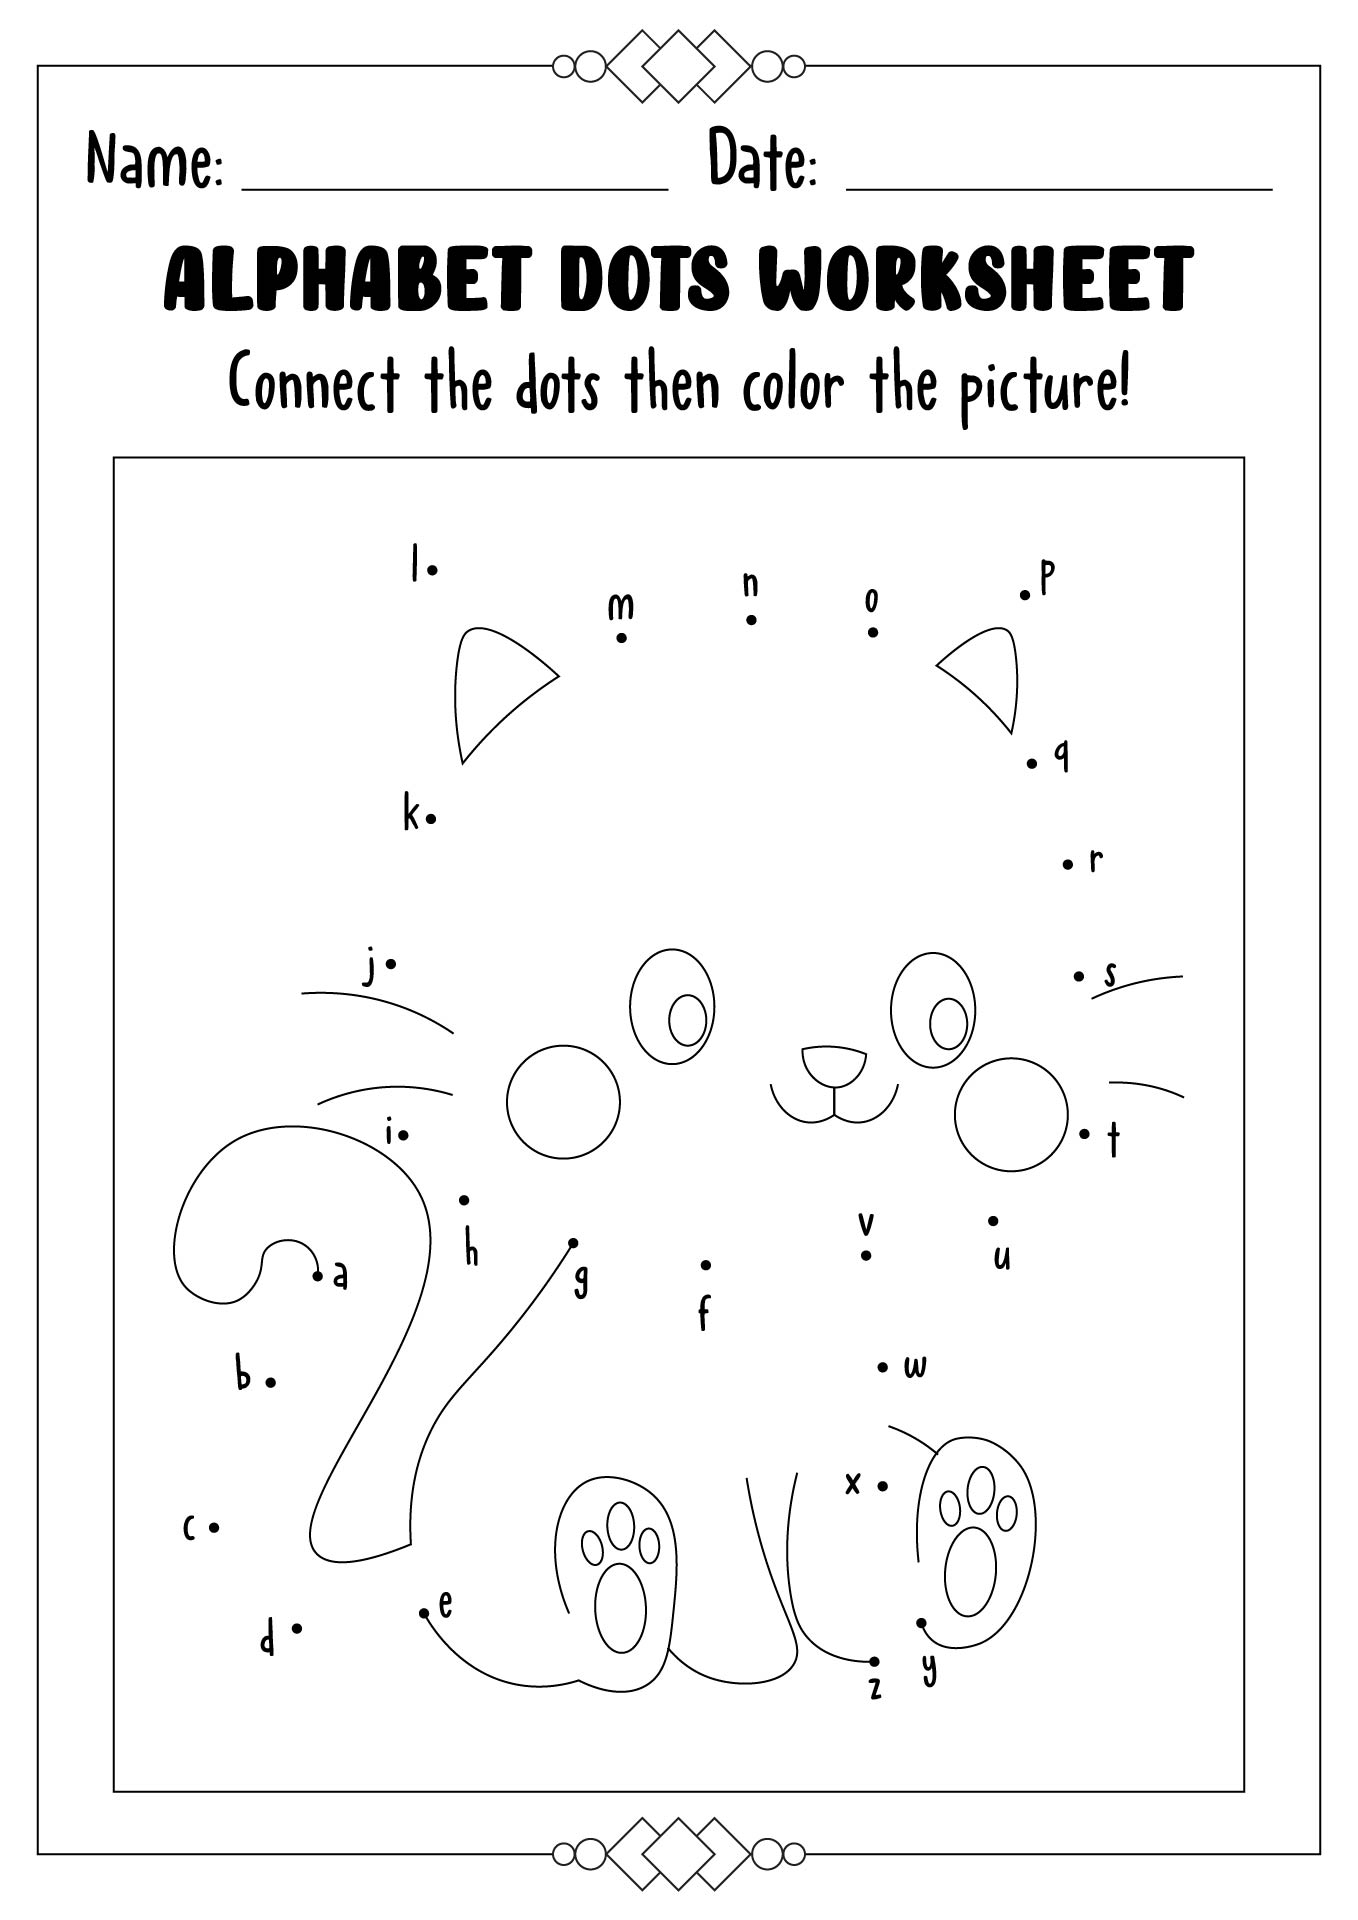 Free Preschool Alphabet Dot Worksheets Image